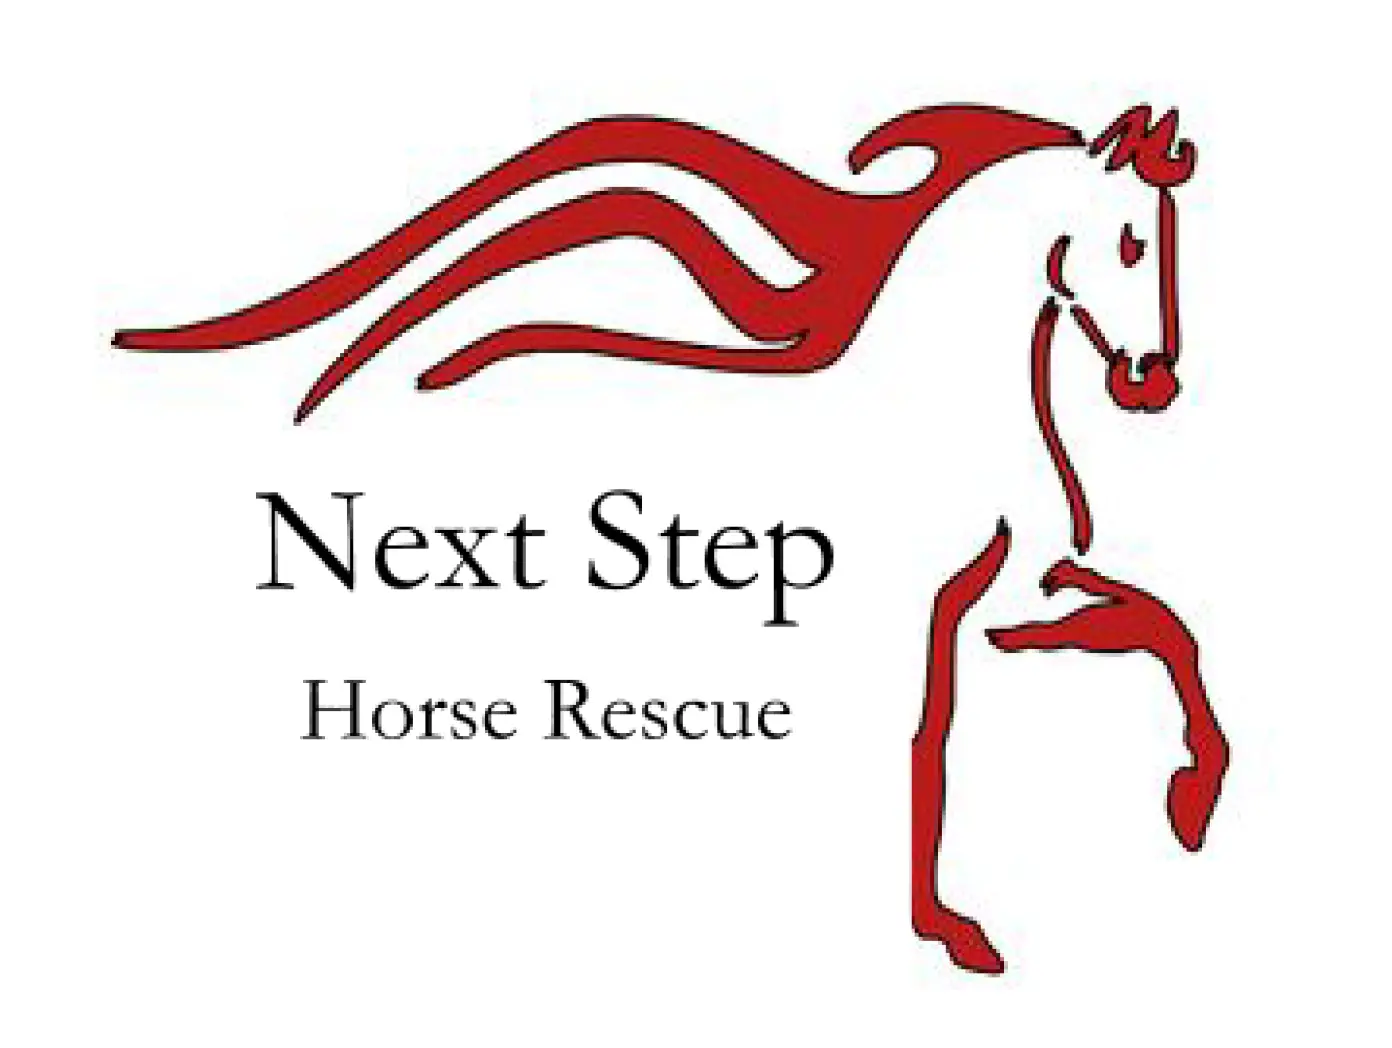 Next Step Horse Rescue